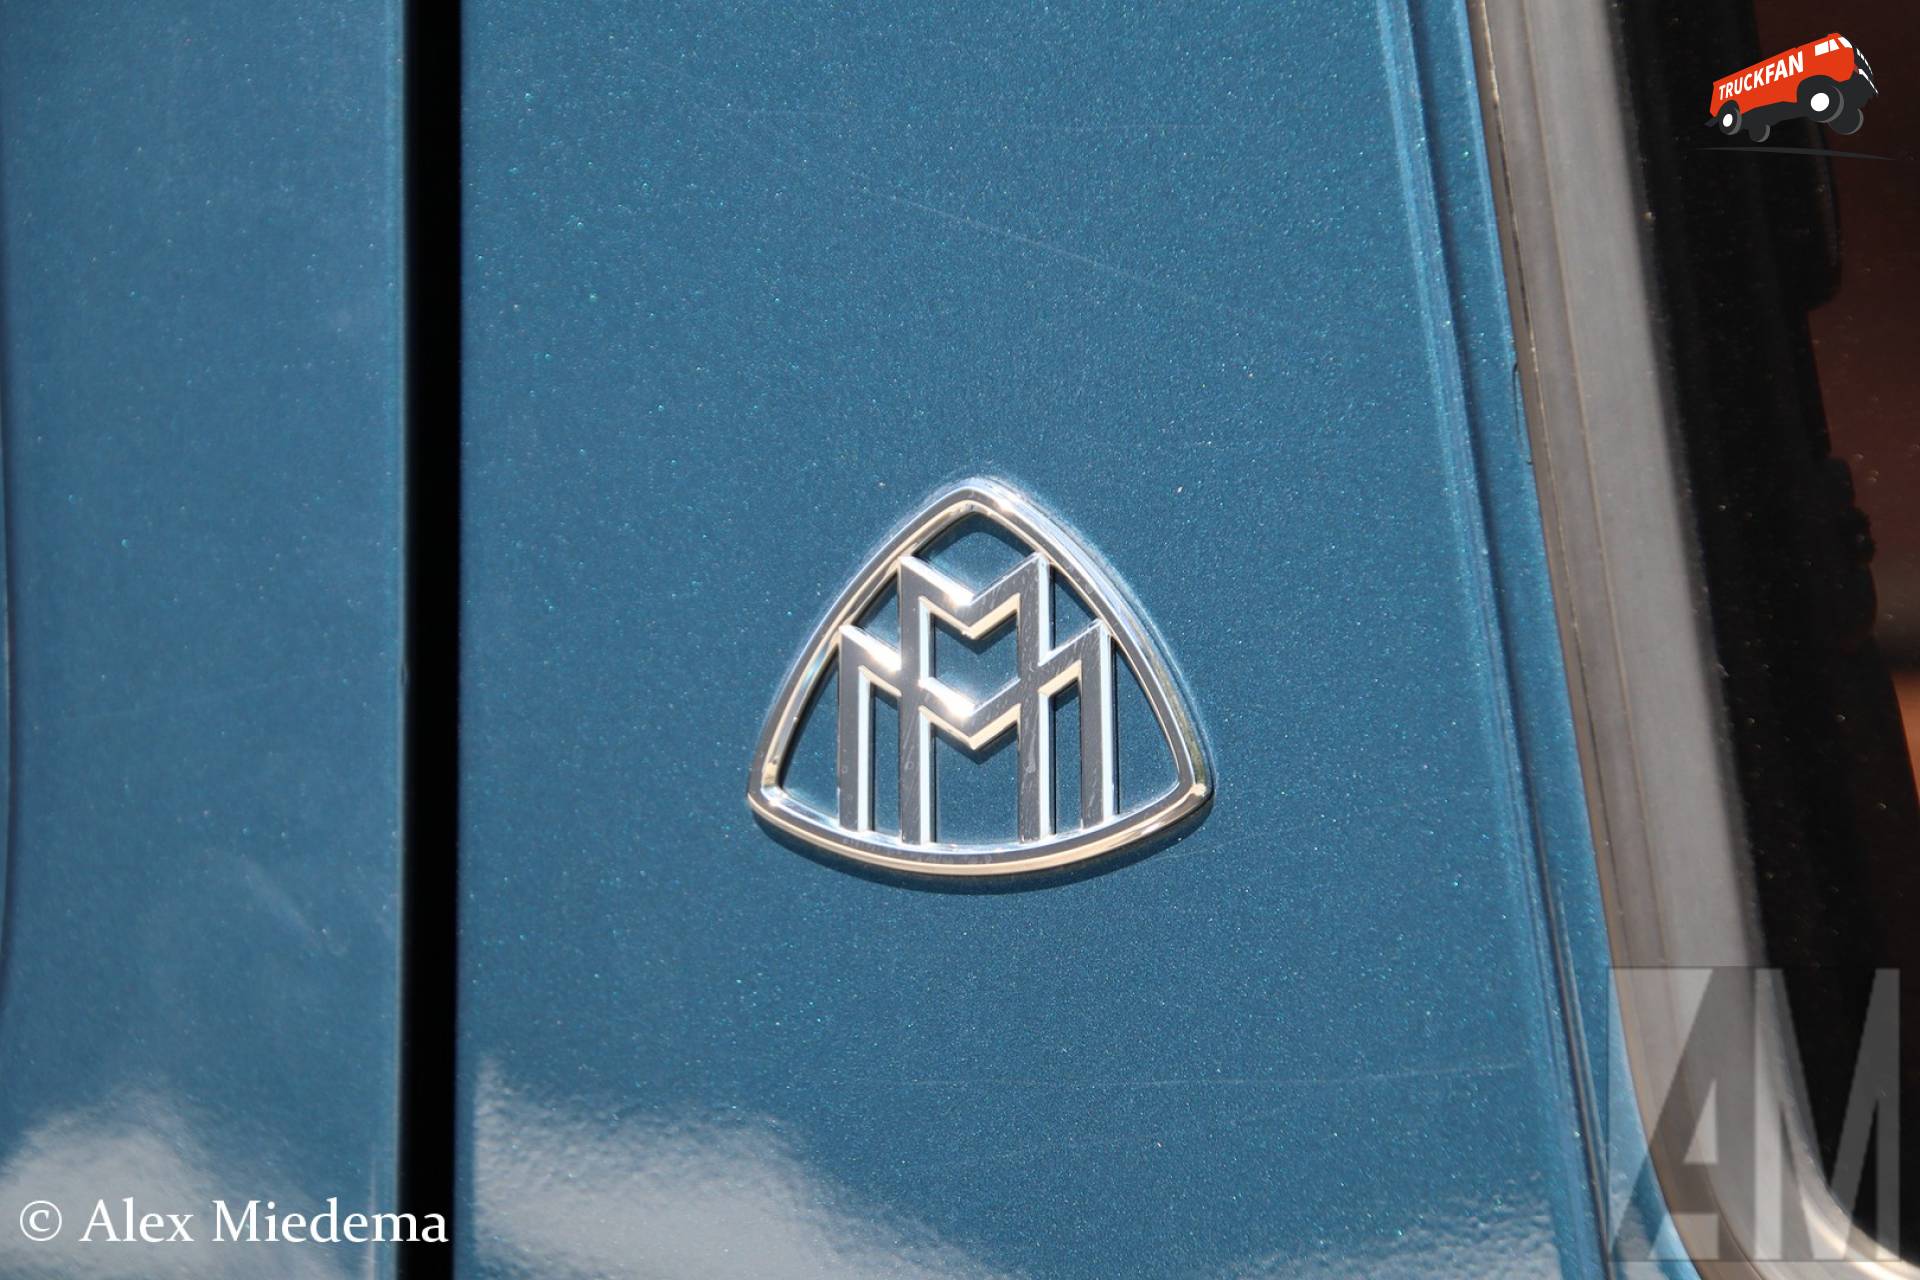 Mercedes-Maybach G 650 Landaulet